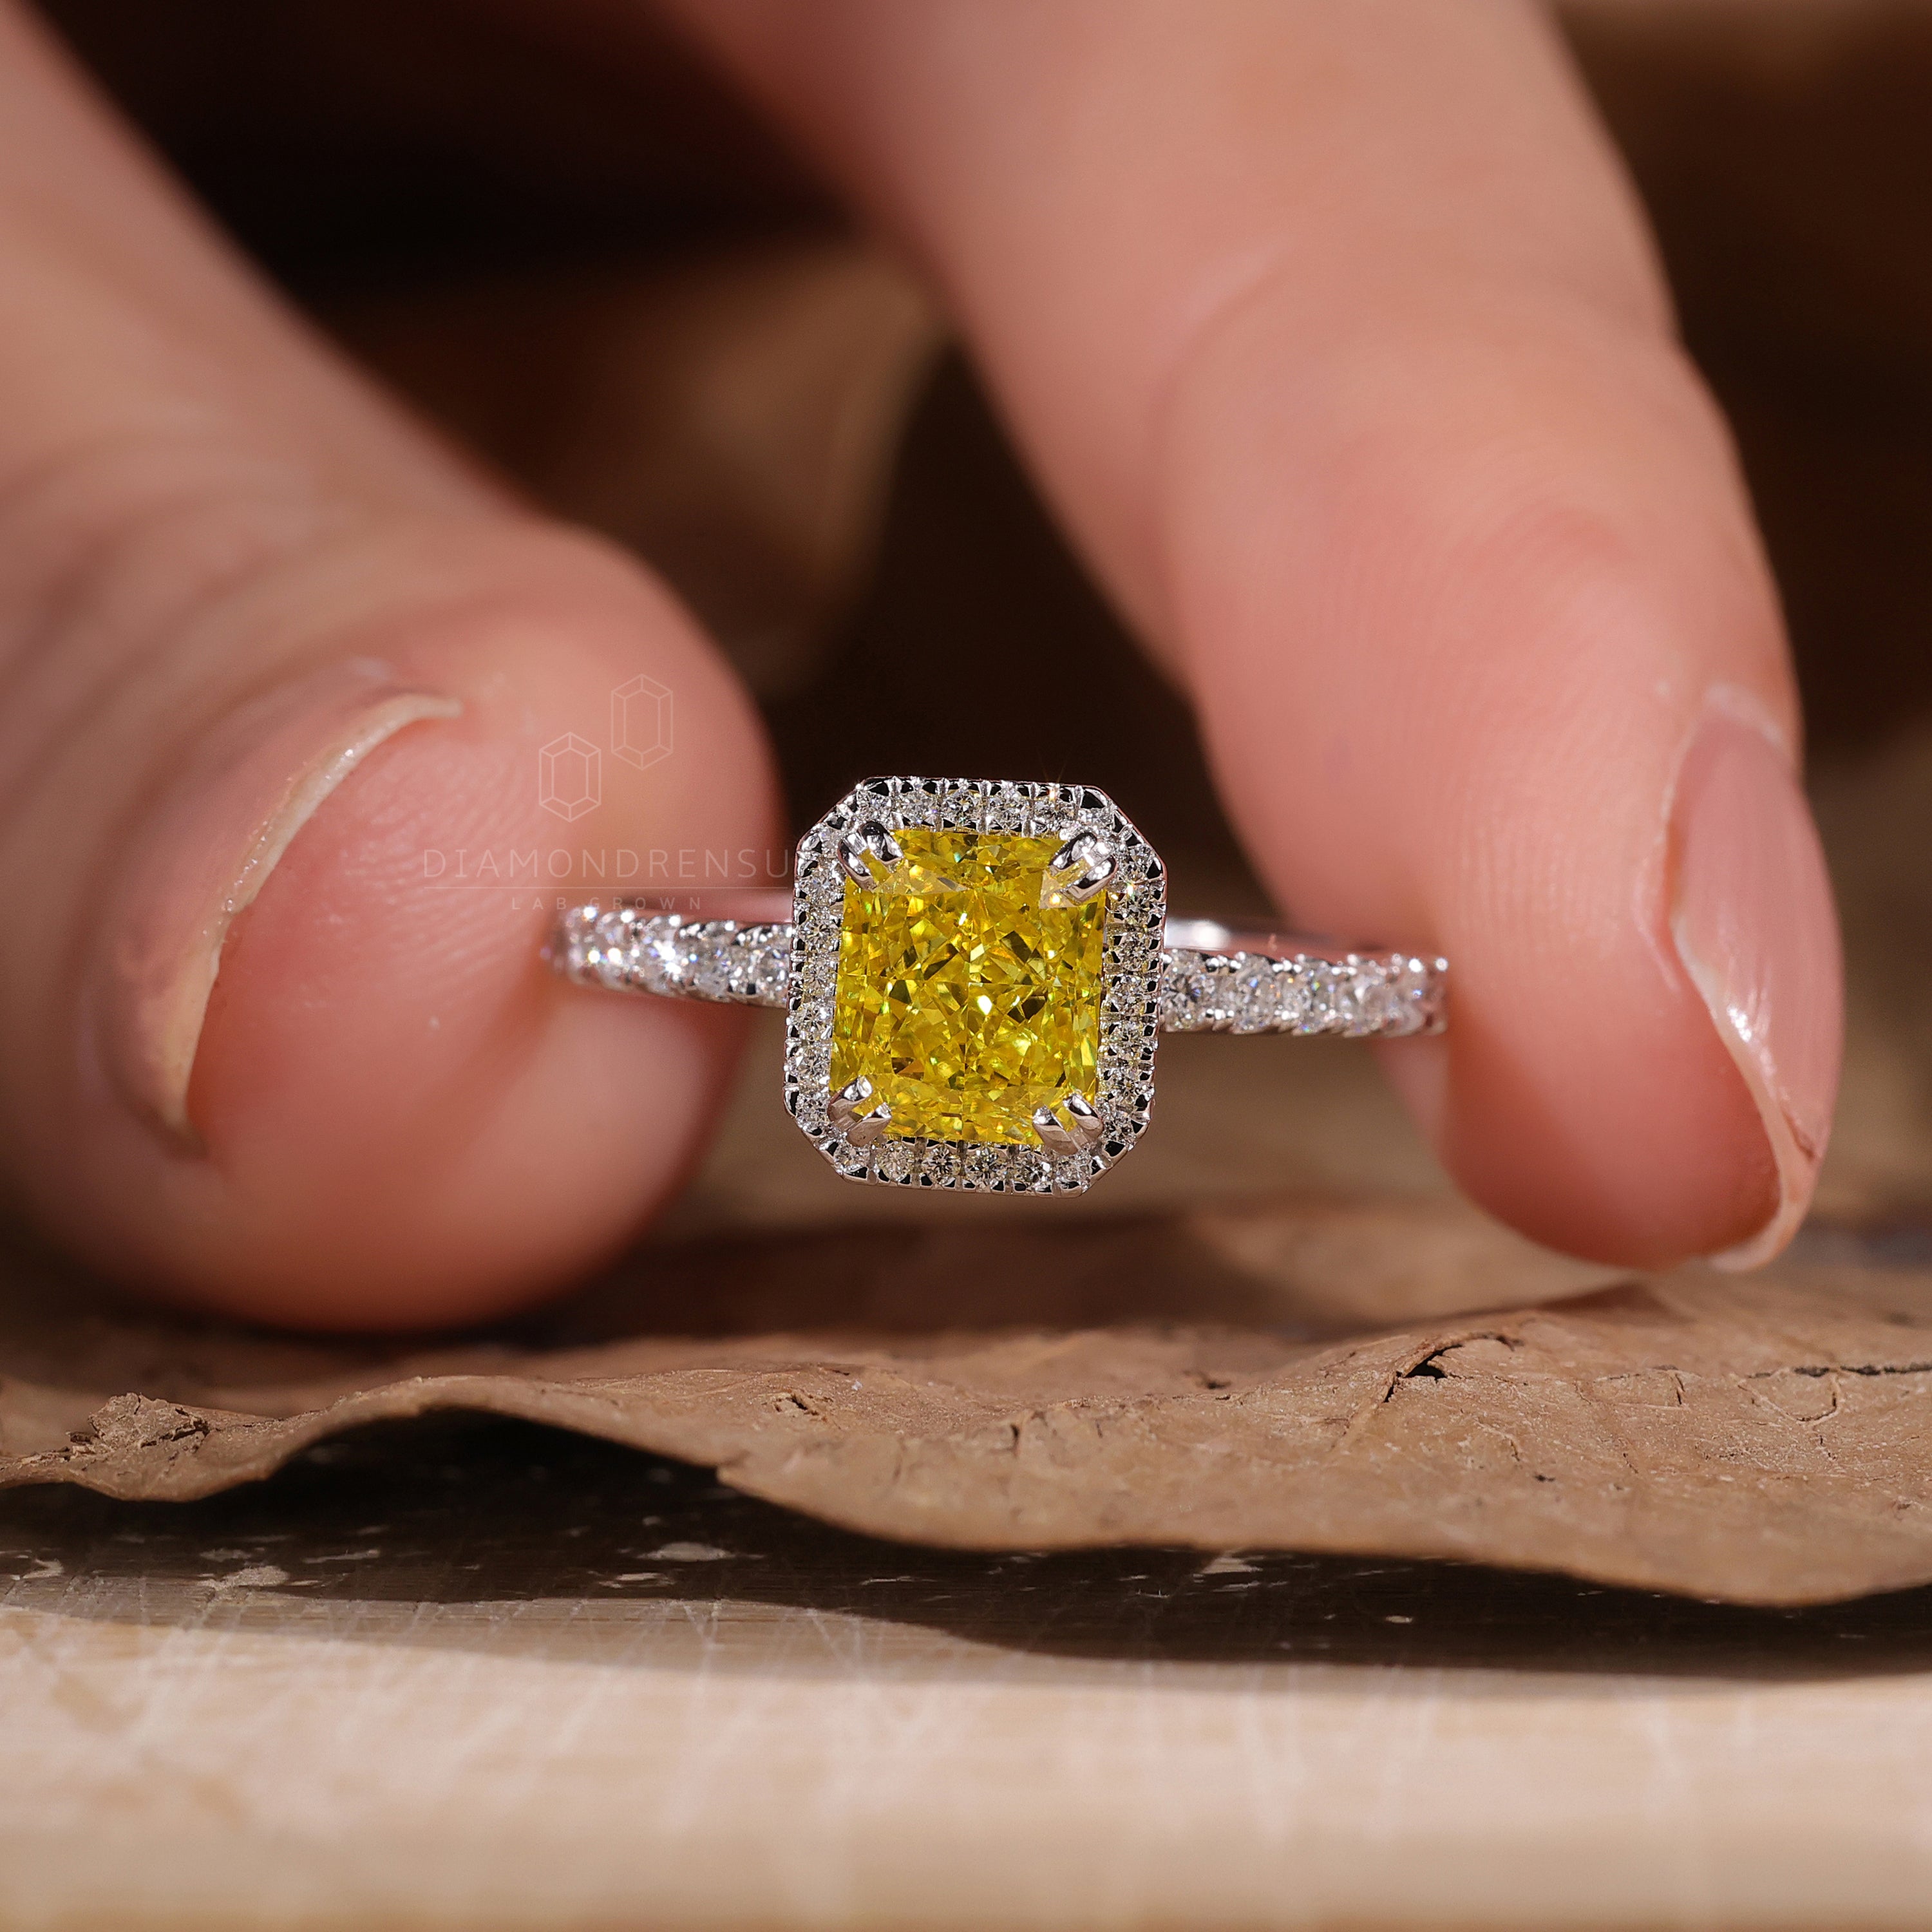 lab diamond wedding ring - diamondrensu